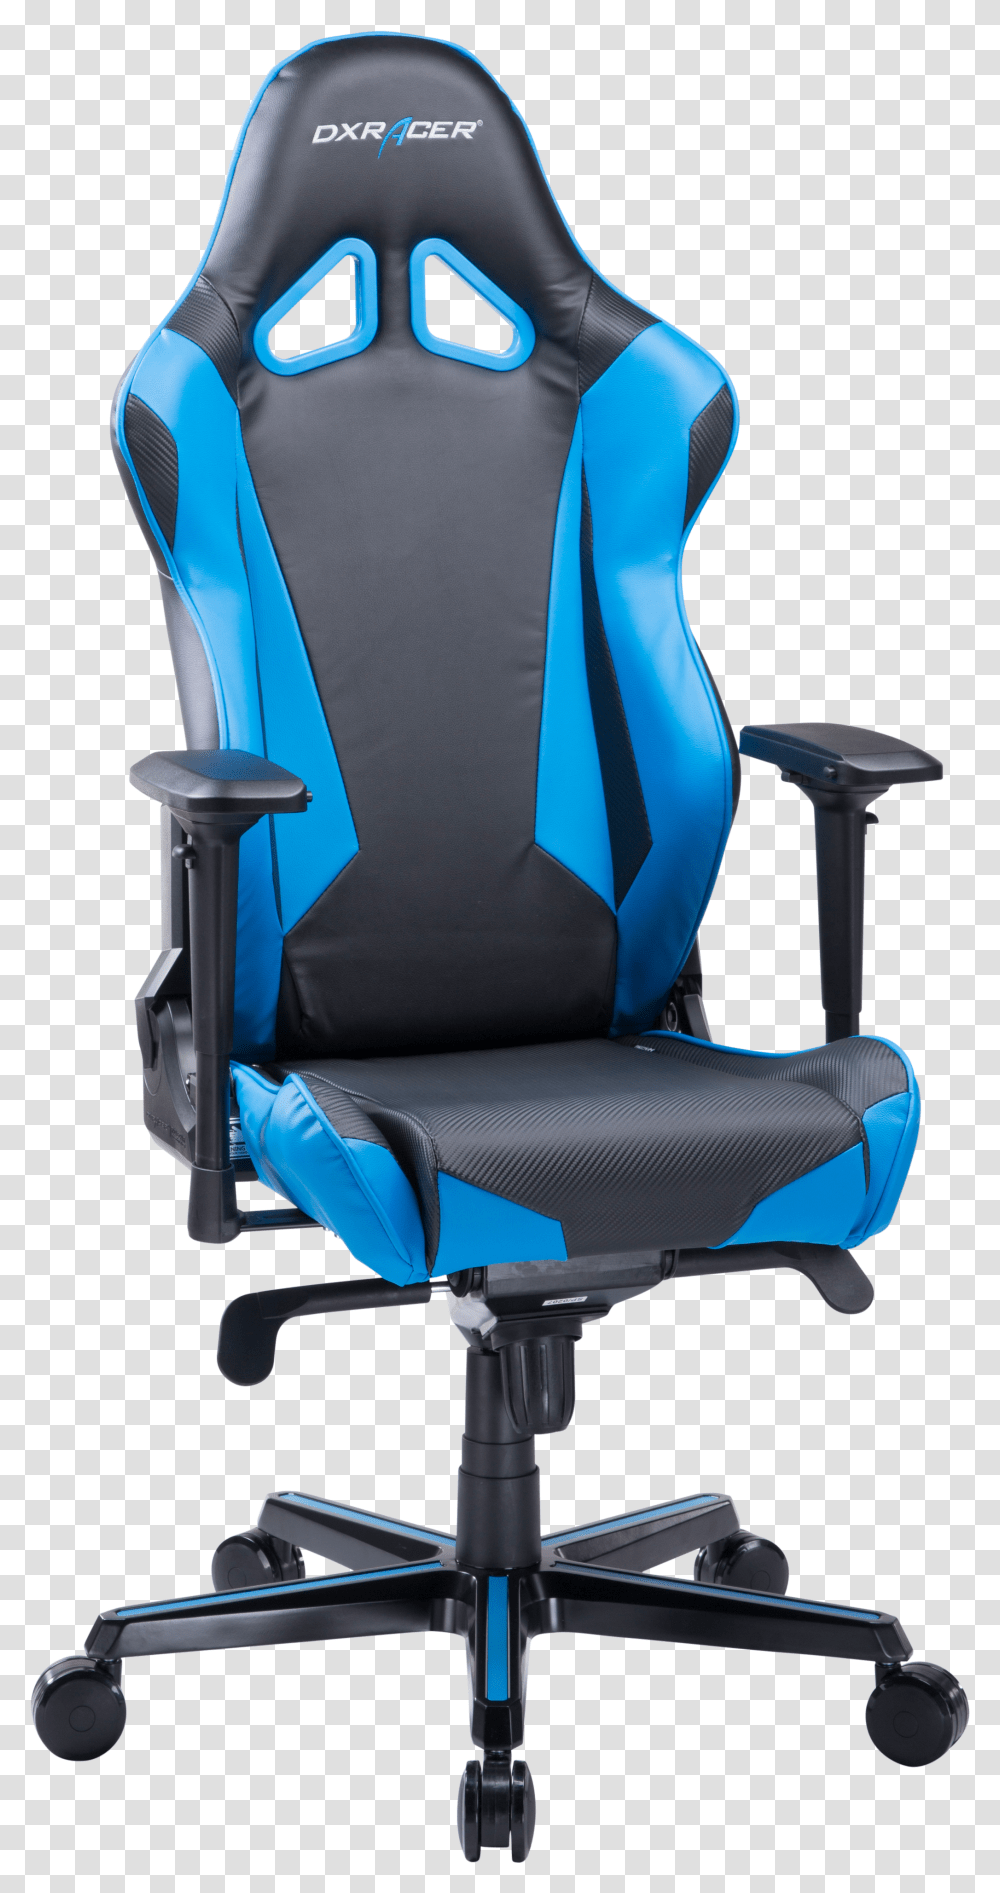 Download Racing Series Doh Gaming Chair Transparent Png